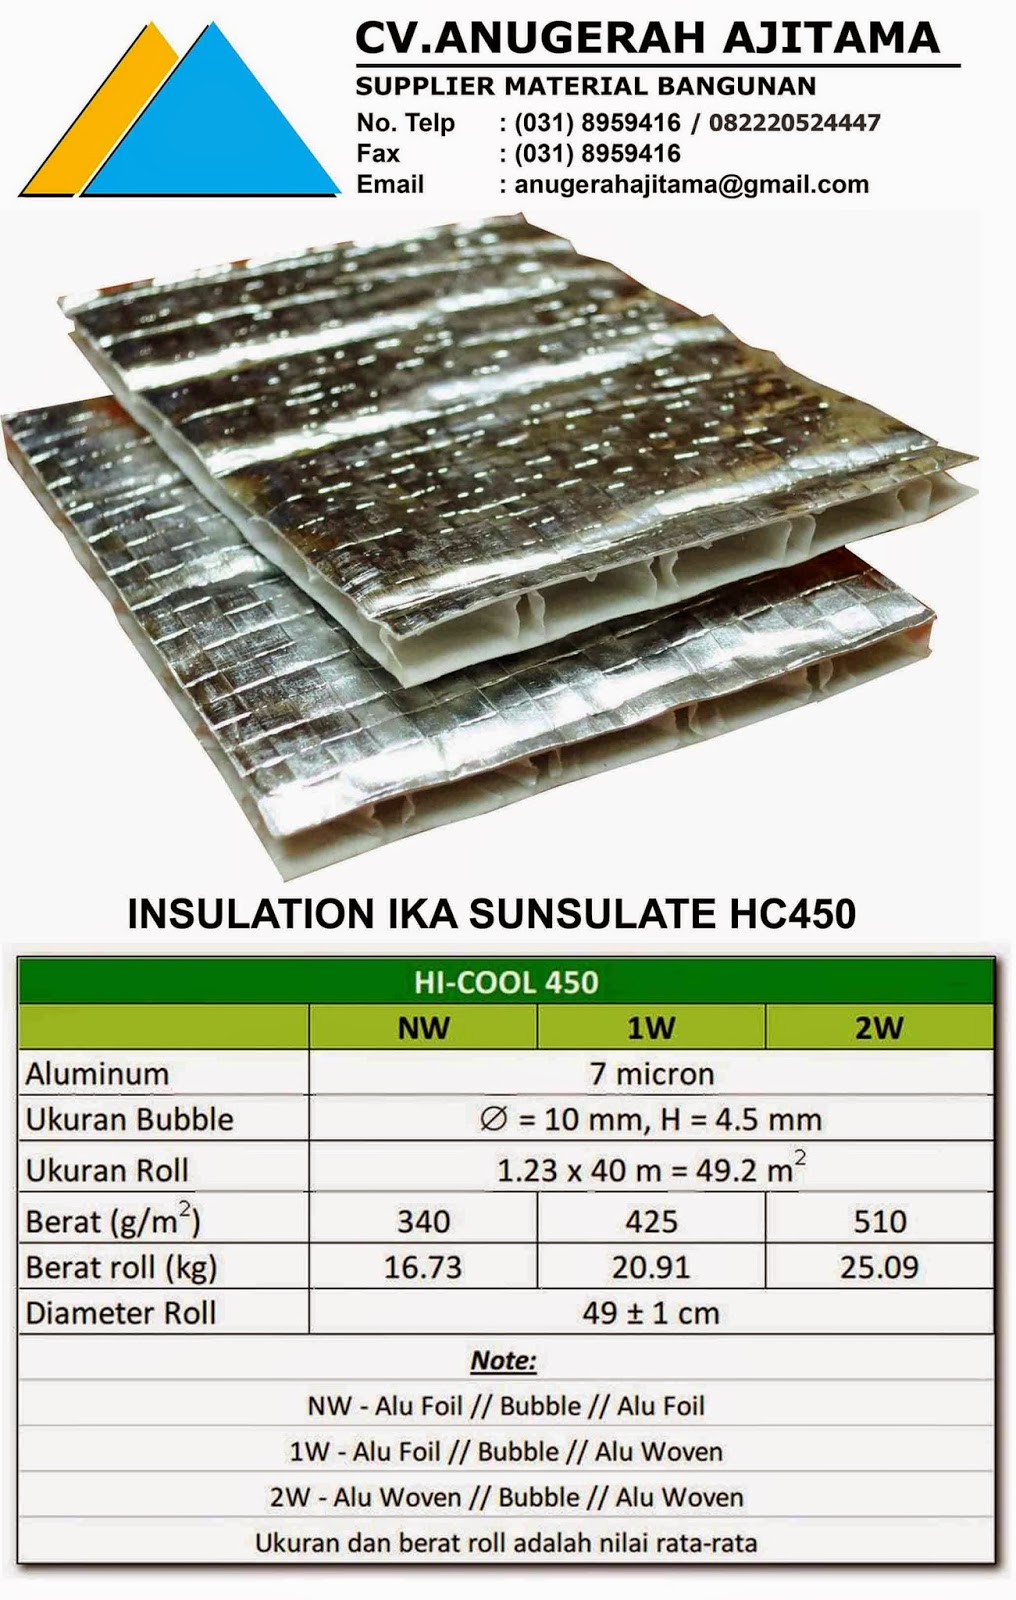 INSULATION IKA SUNSULATE HC450